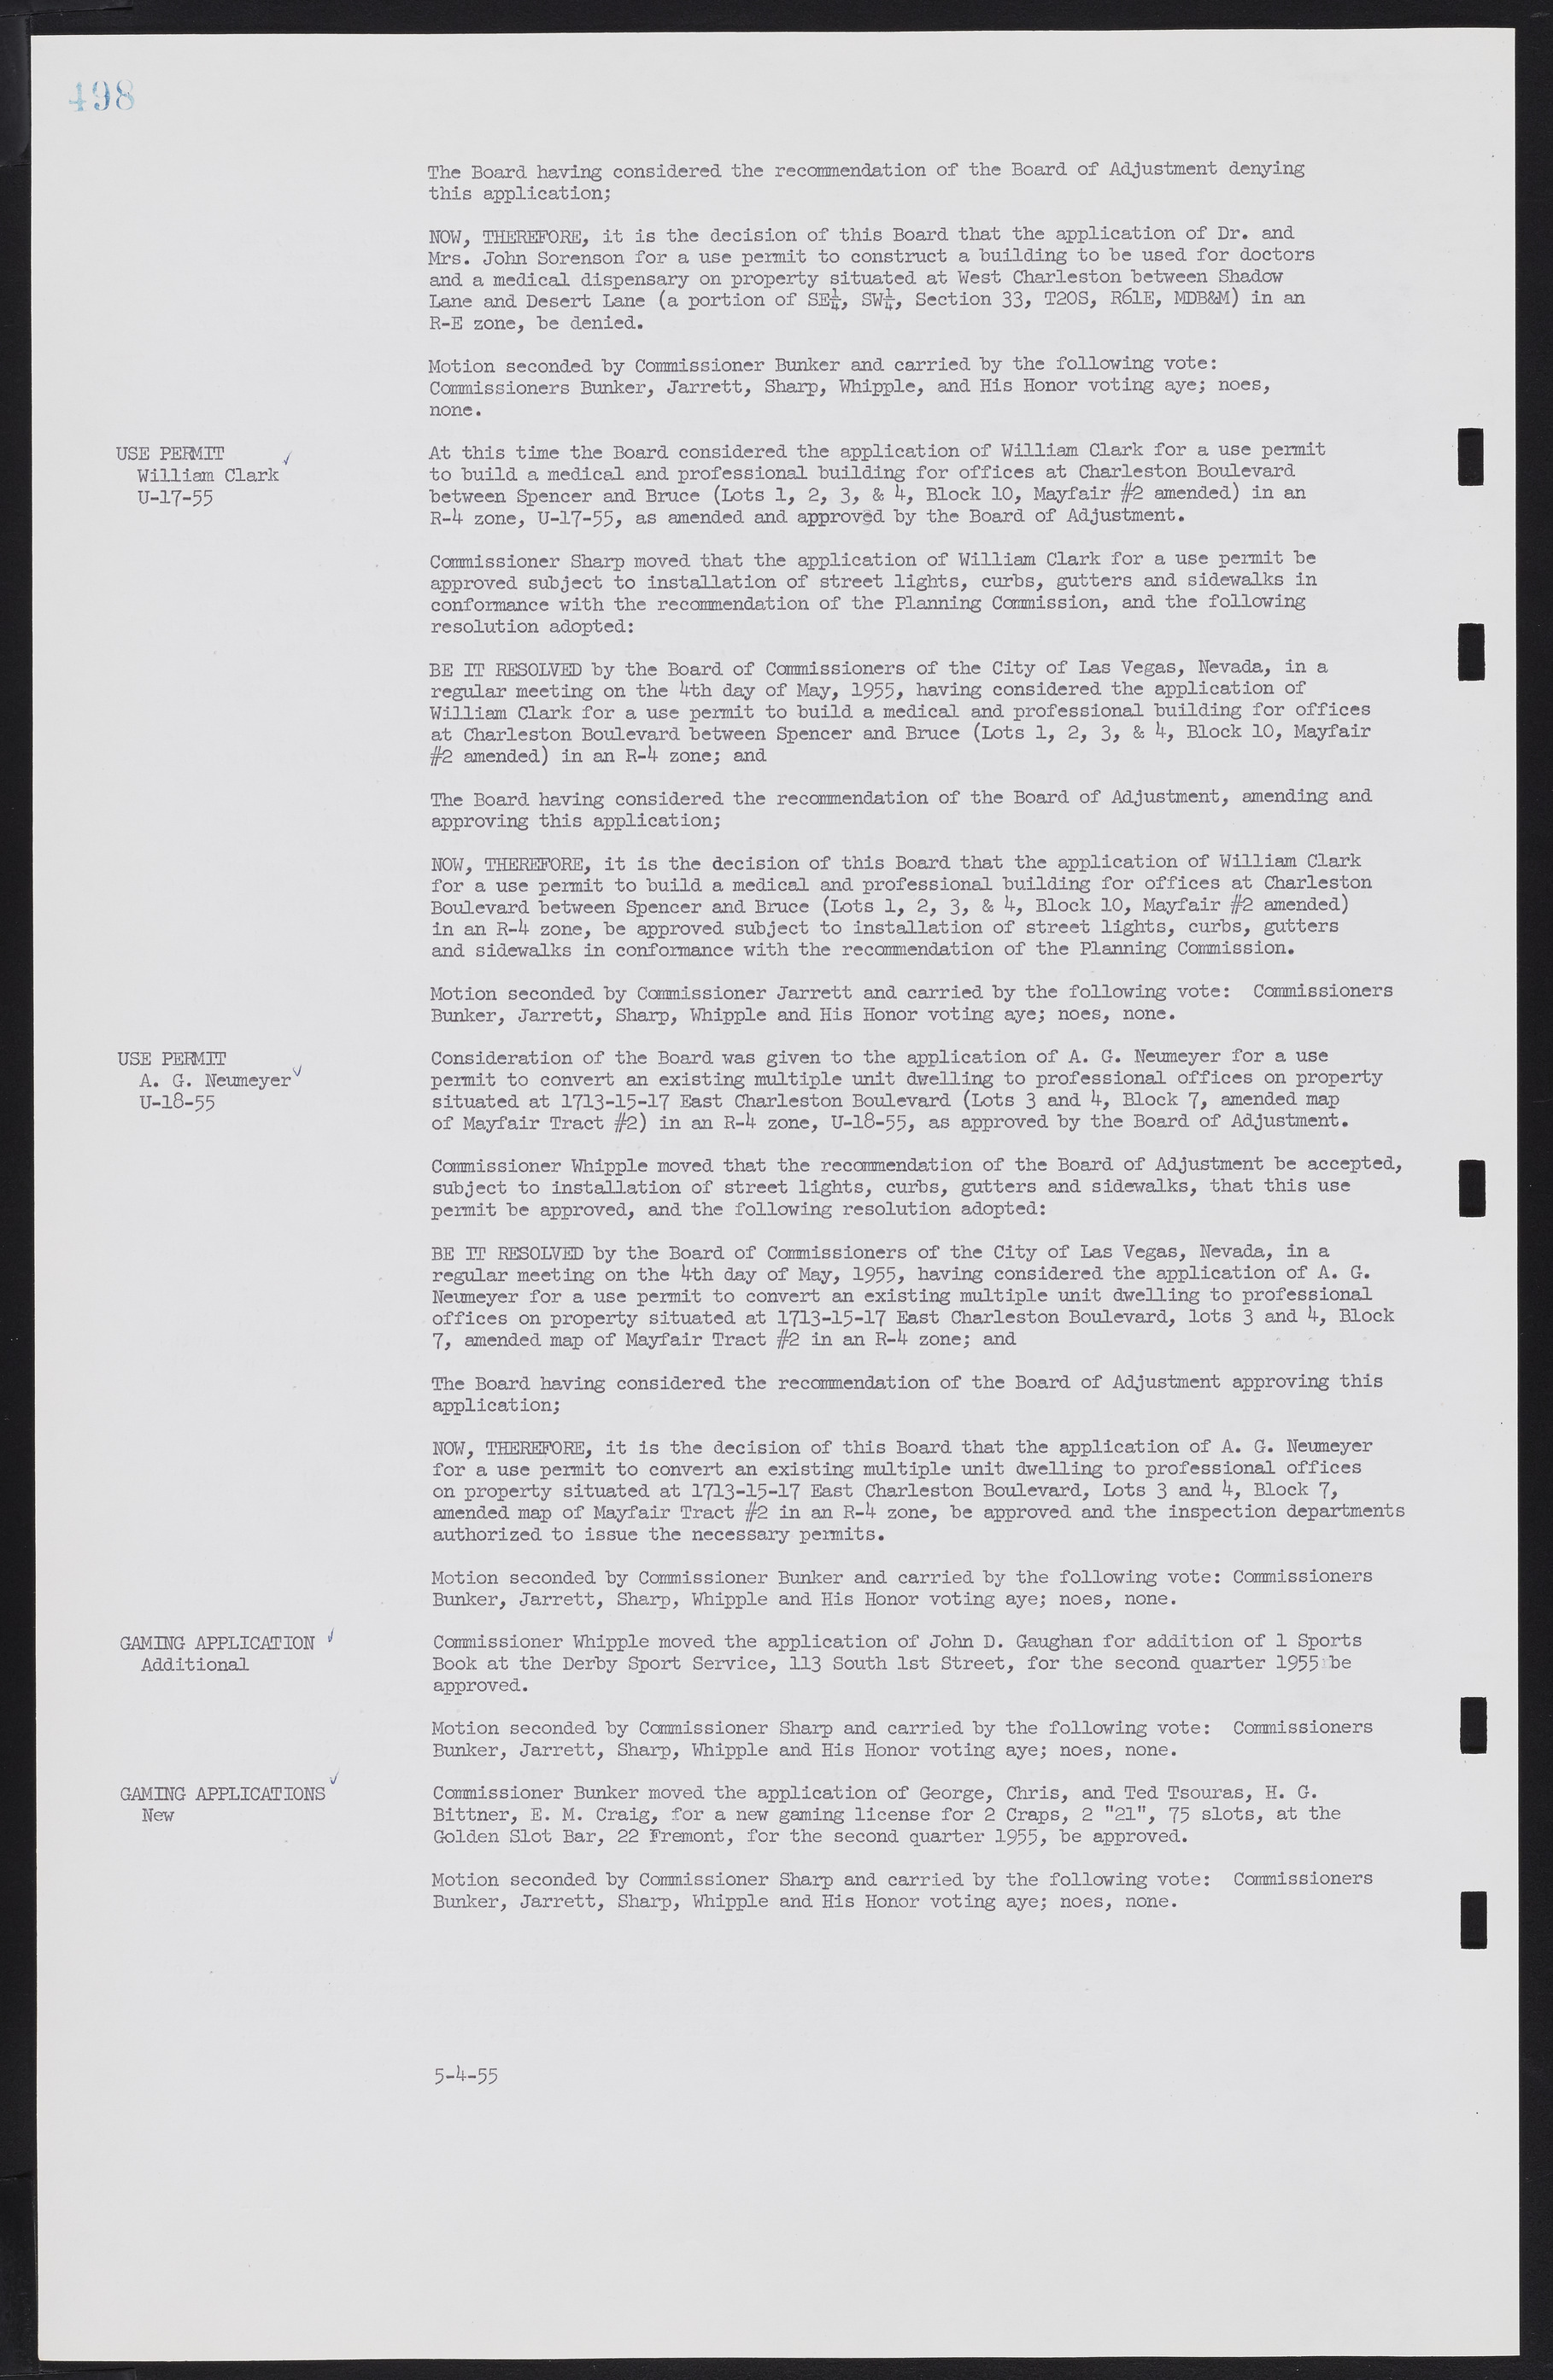 Las Vegas City Commission Minutes, February 17, 1954 to September 21, 1955, lvc000009-504